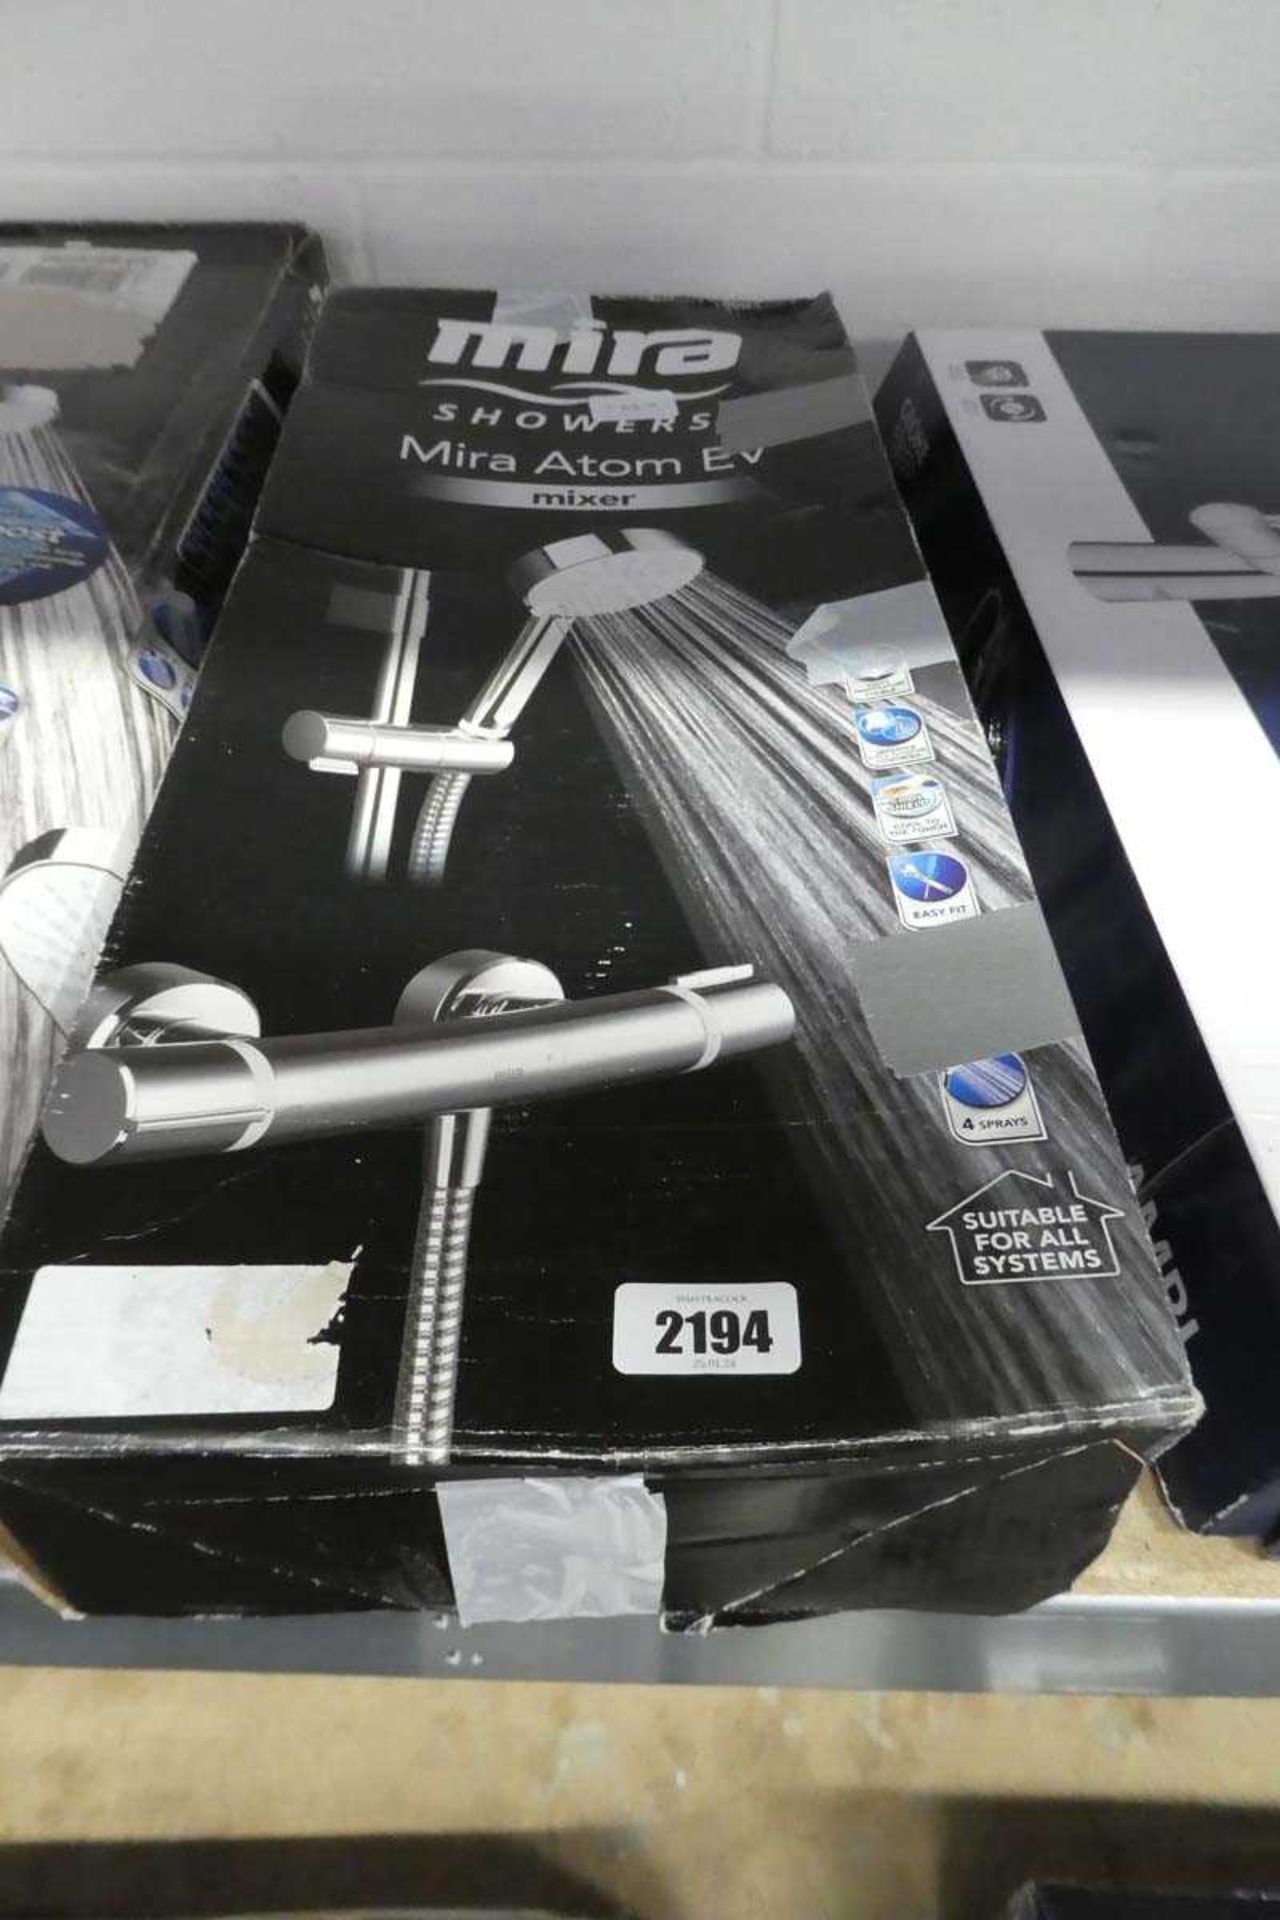 Boxed Mira Atom EV mixer shower